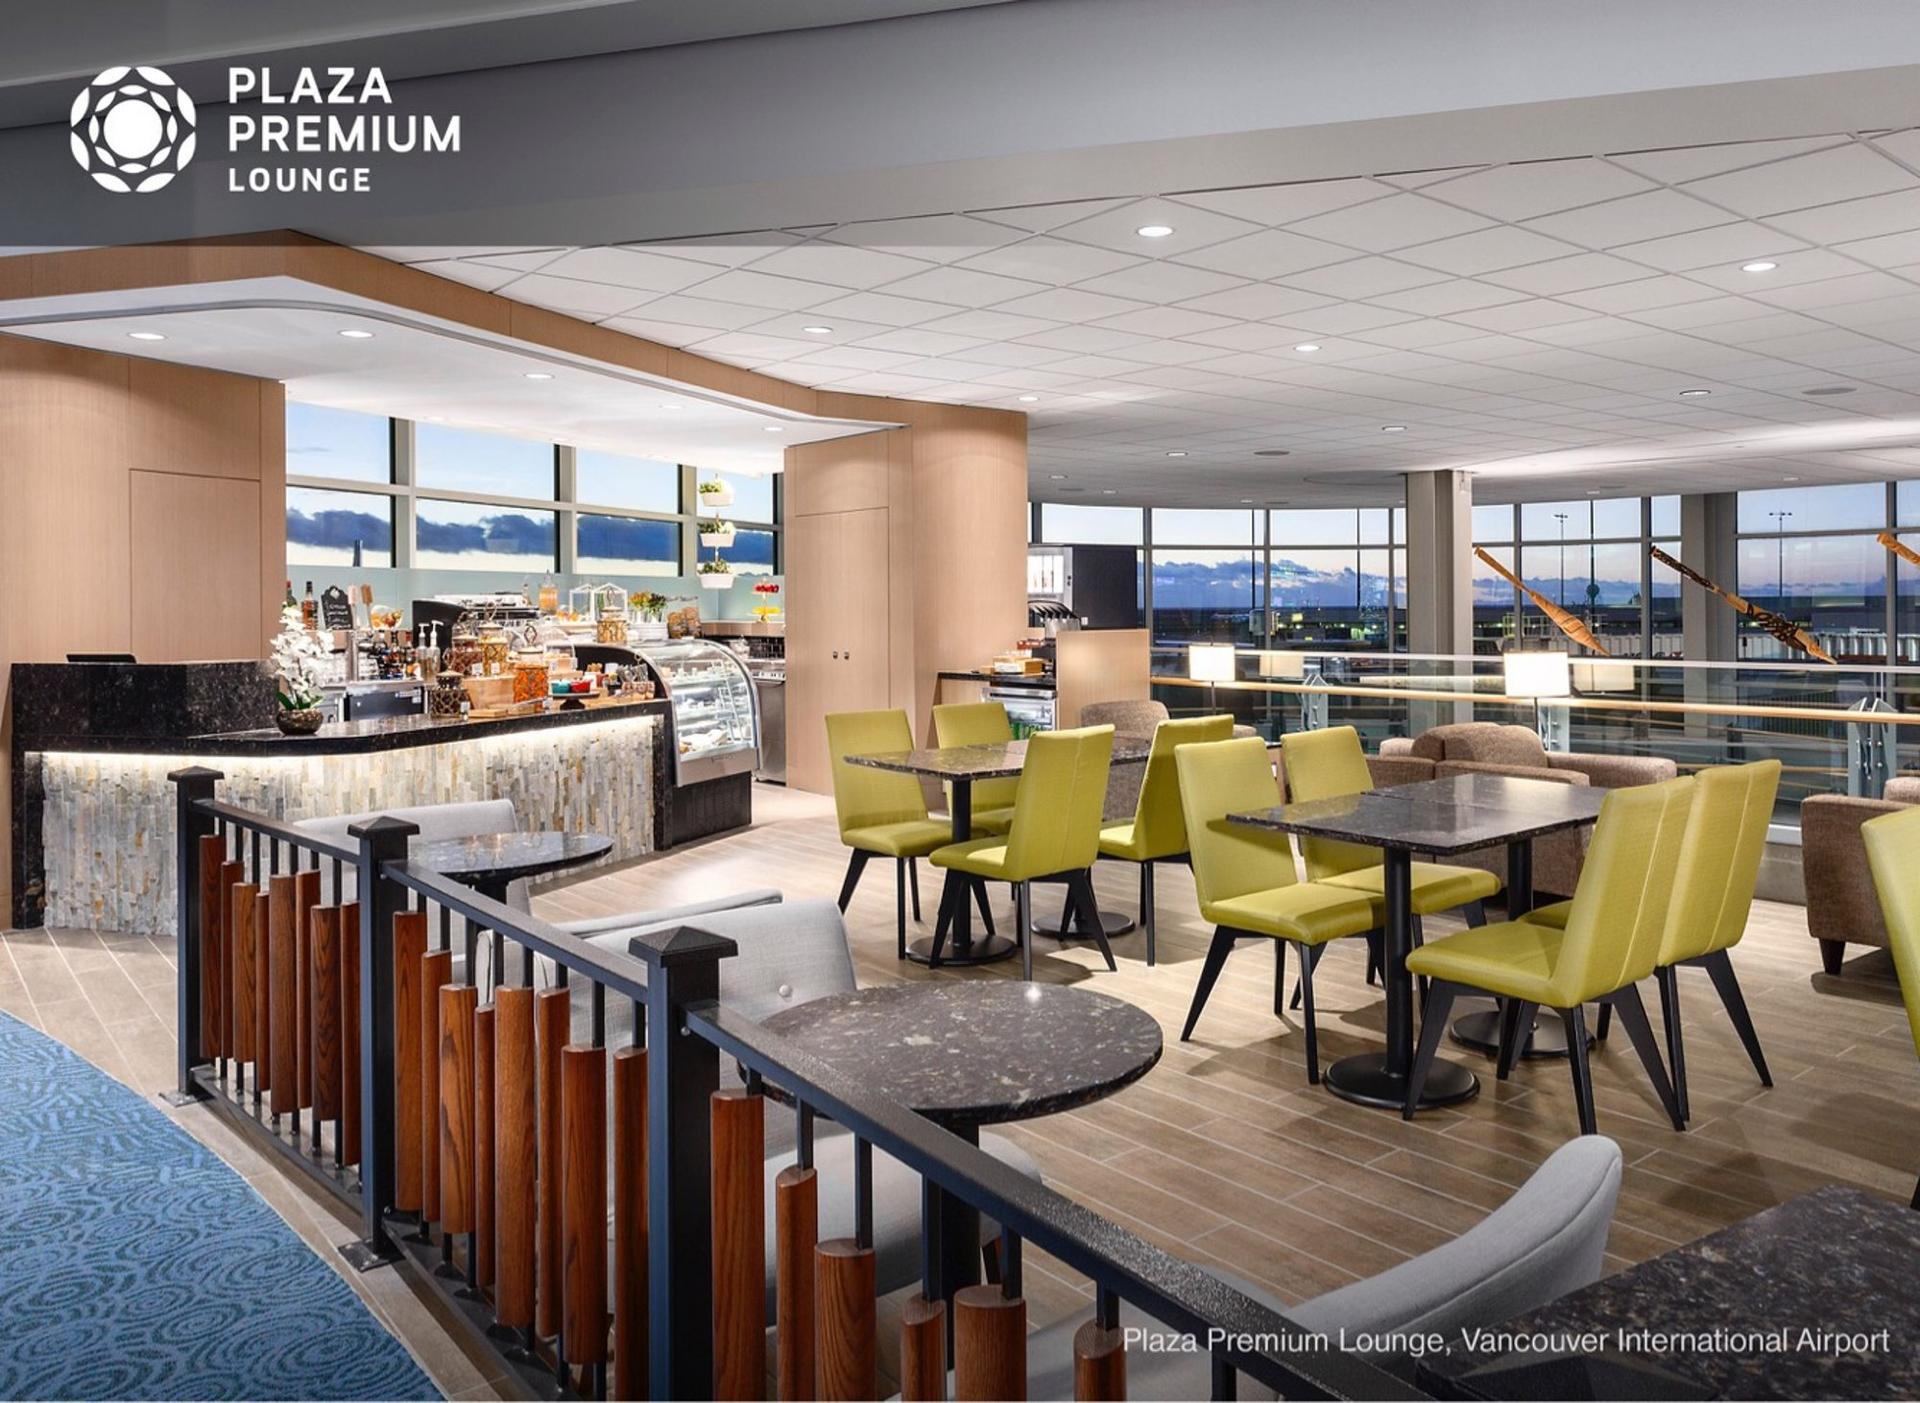 Plaza Premium Lounge (Domestic Gate C29) image 8 of 17